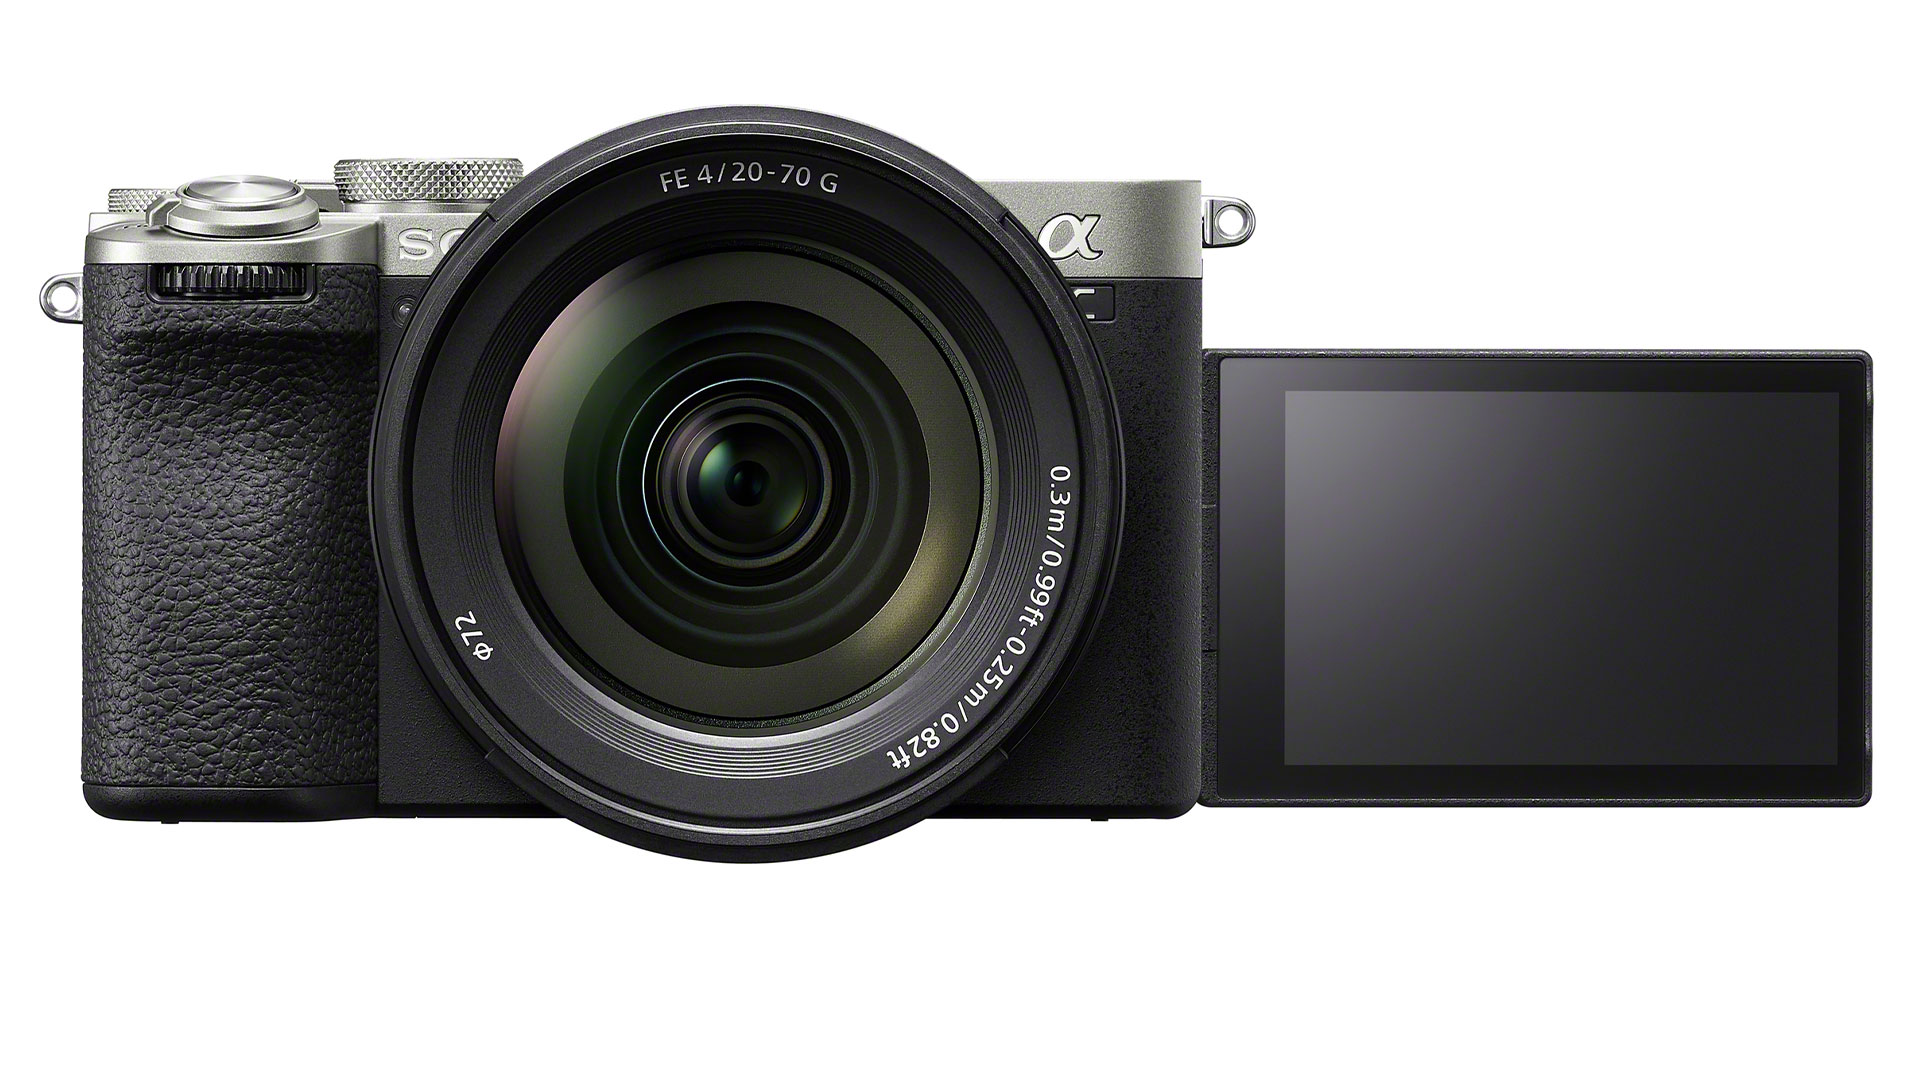 Sony A7C II Full-Frame Camera Body Black